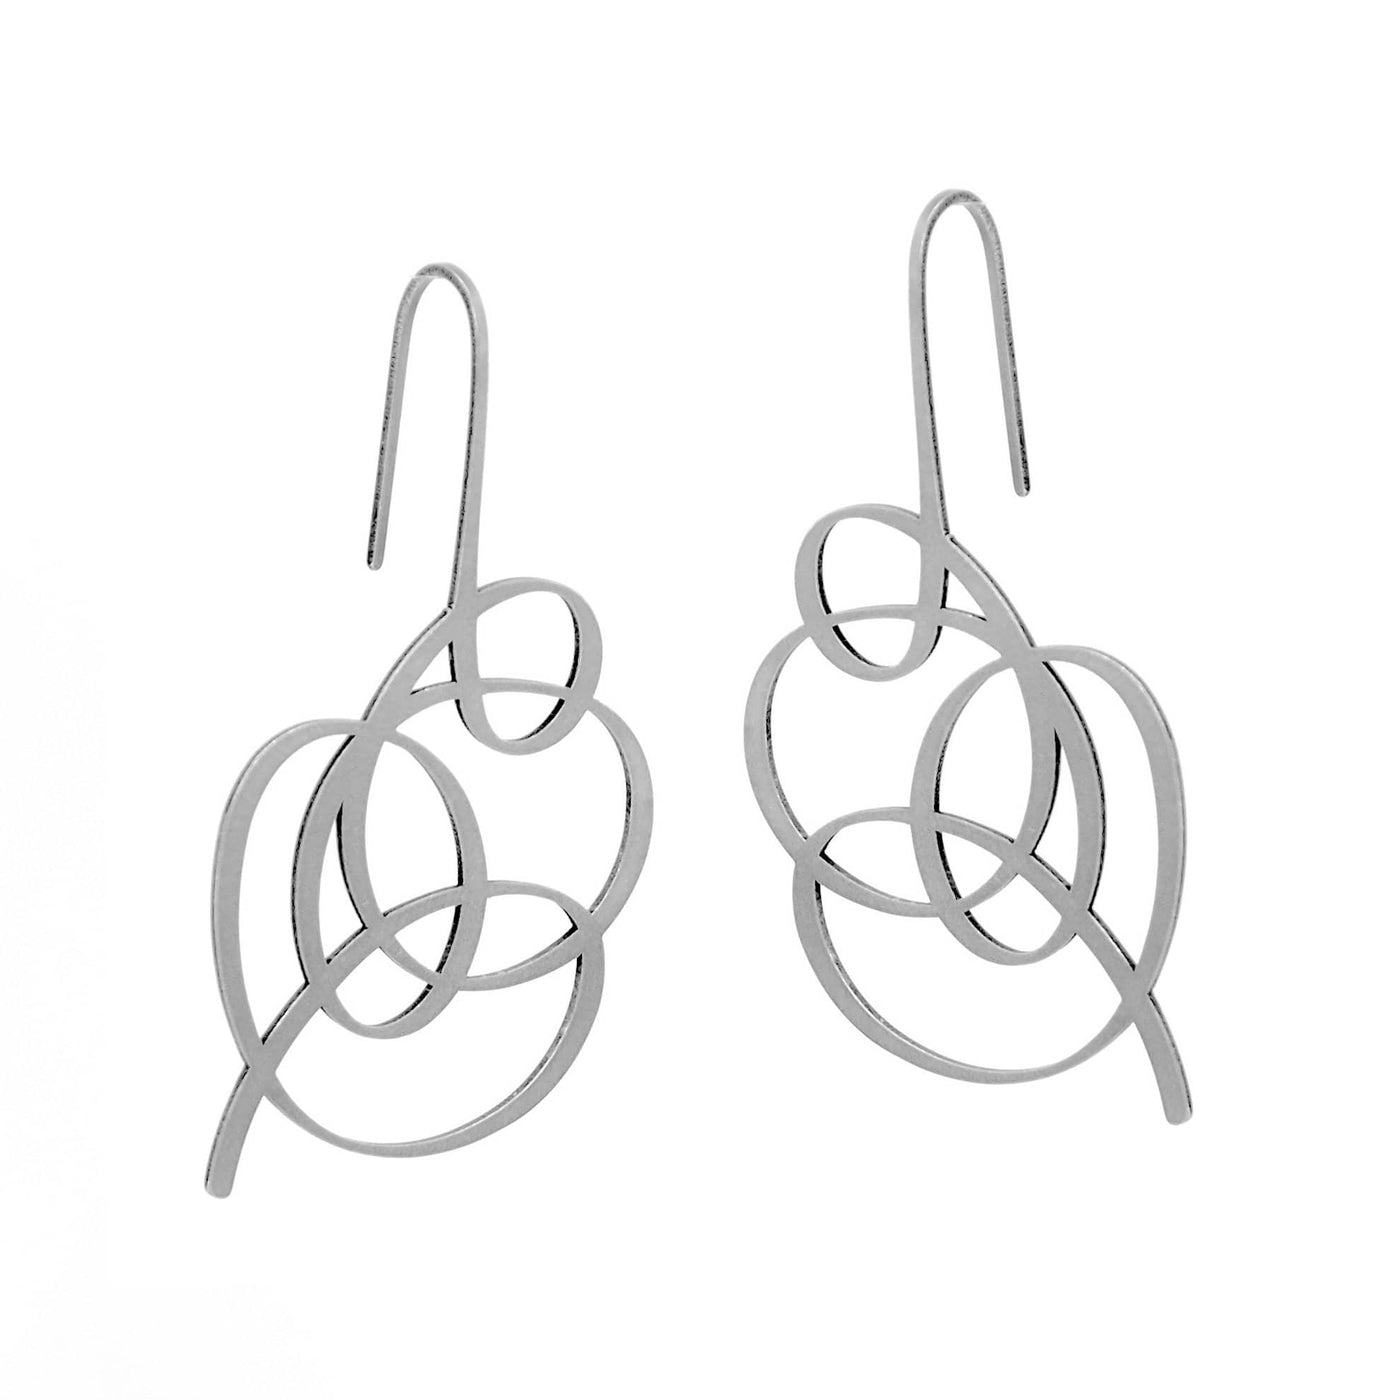 Wisp Earrings - Raw Stainless Steel - inSync design